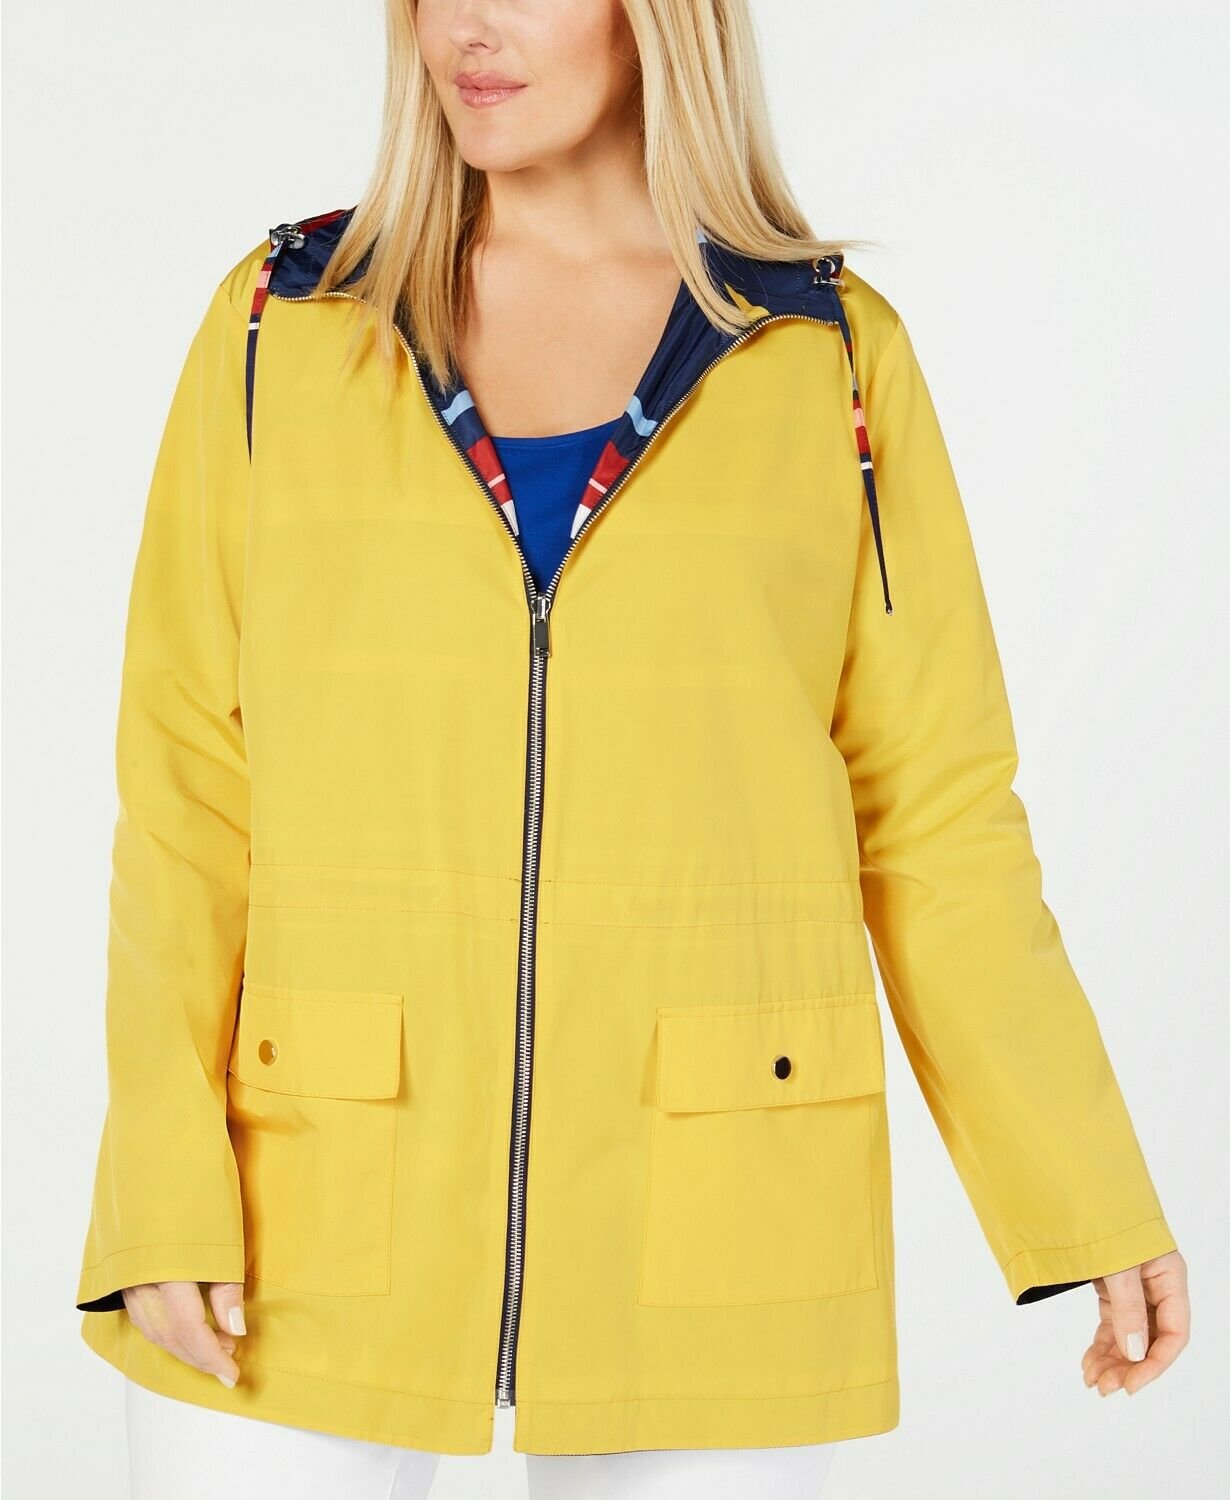 Charter Club Women's Plus Reversible Jacket  Yellow Size Extra Large - image 1 of 3